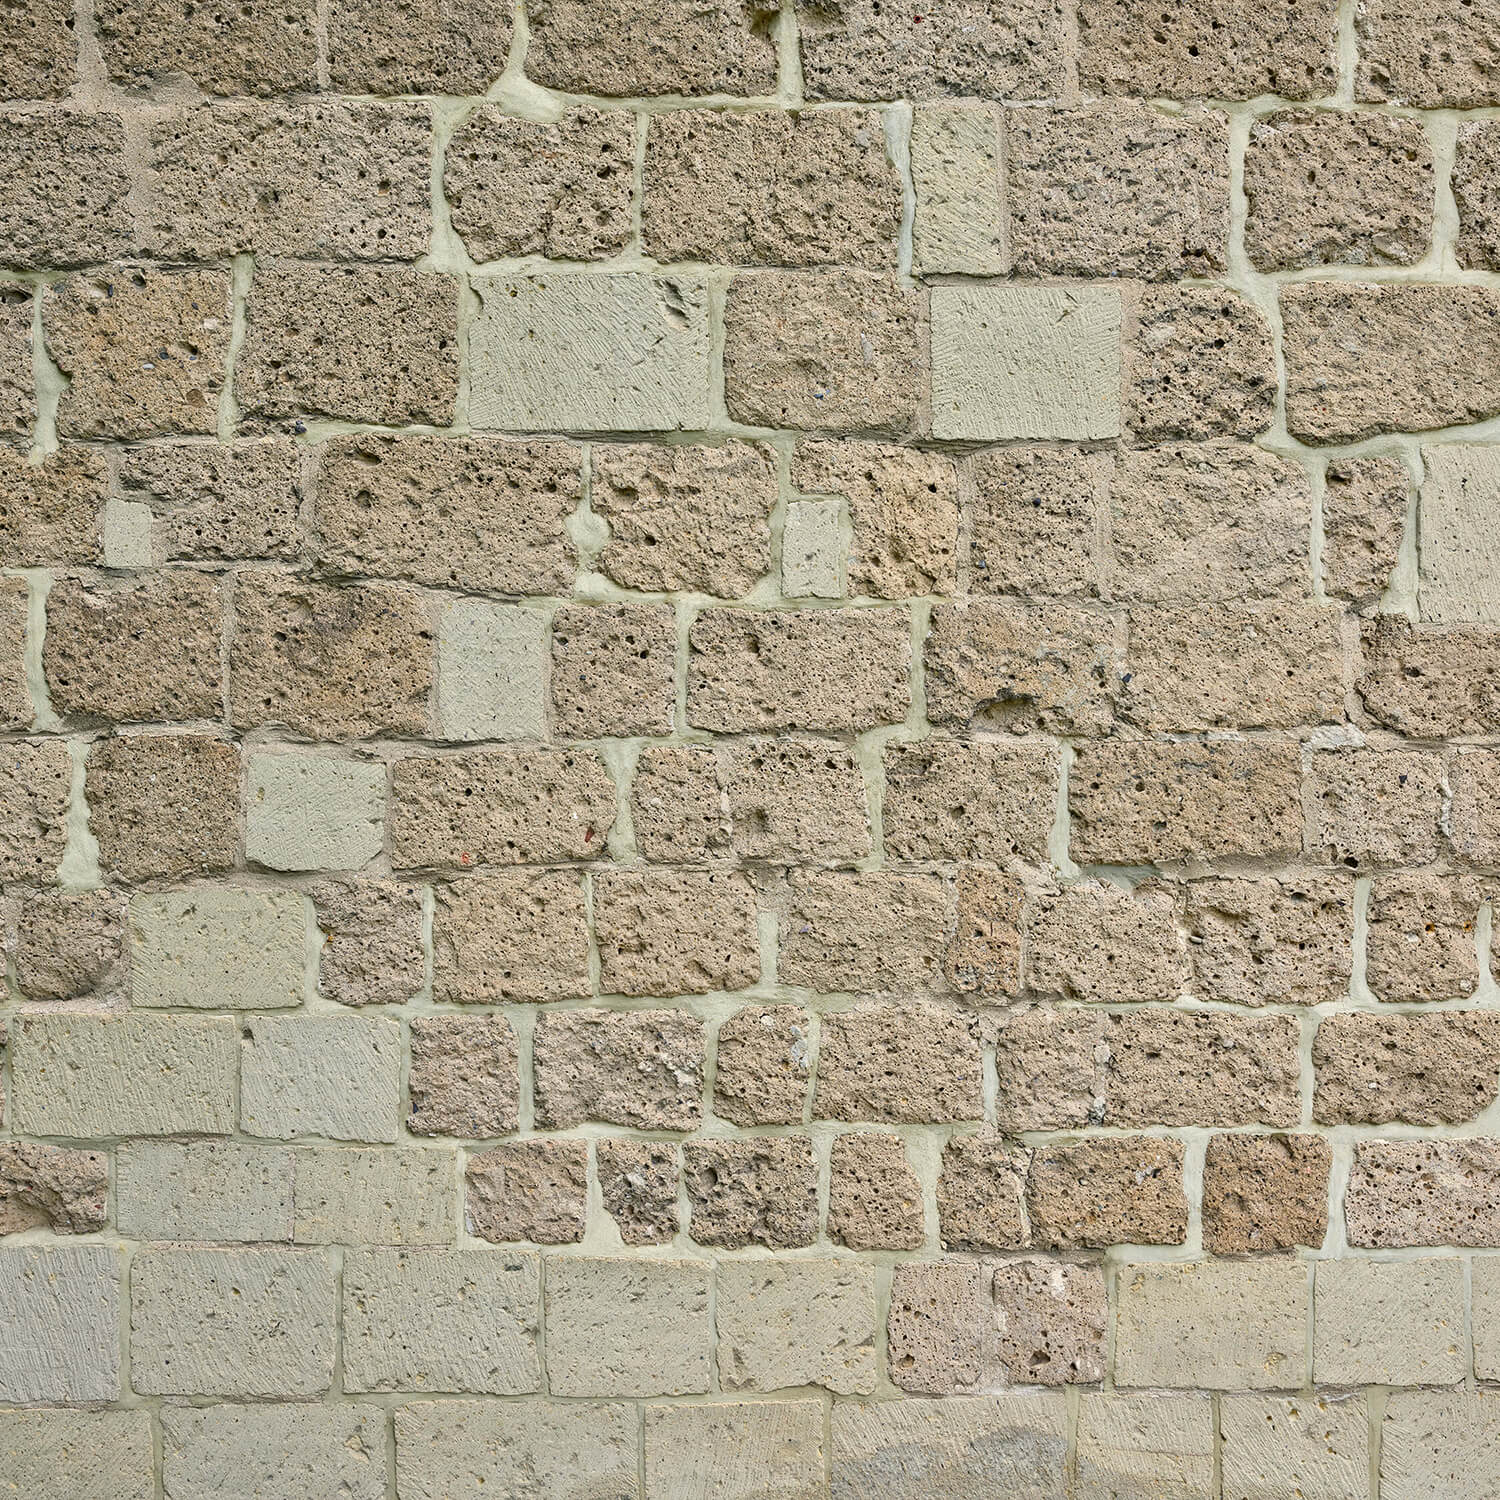 Wall with big bricks